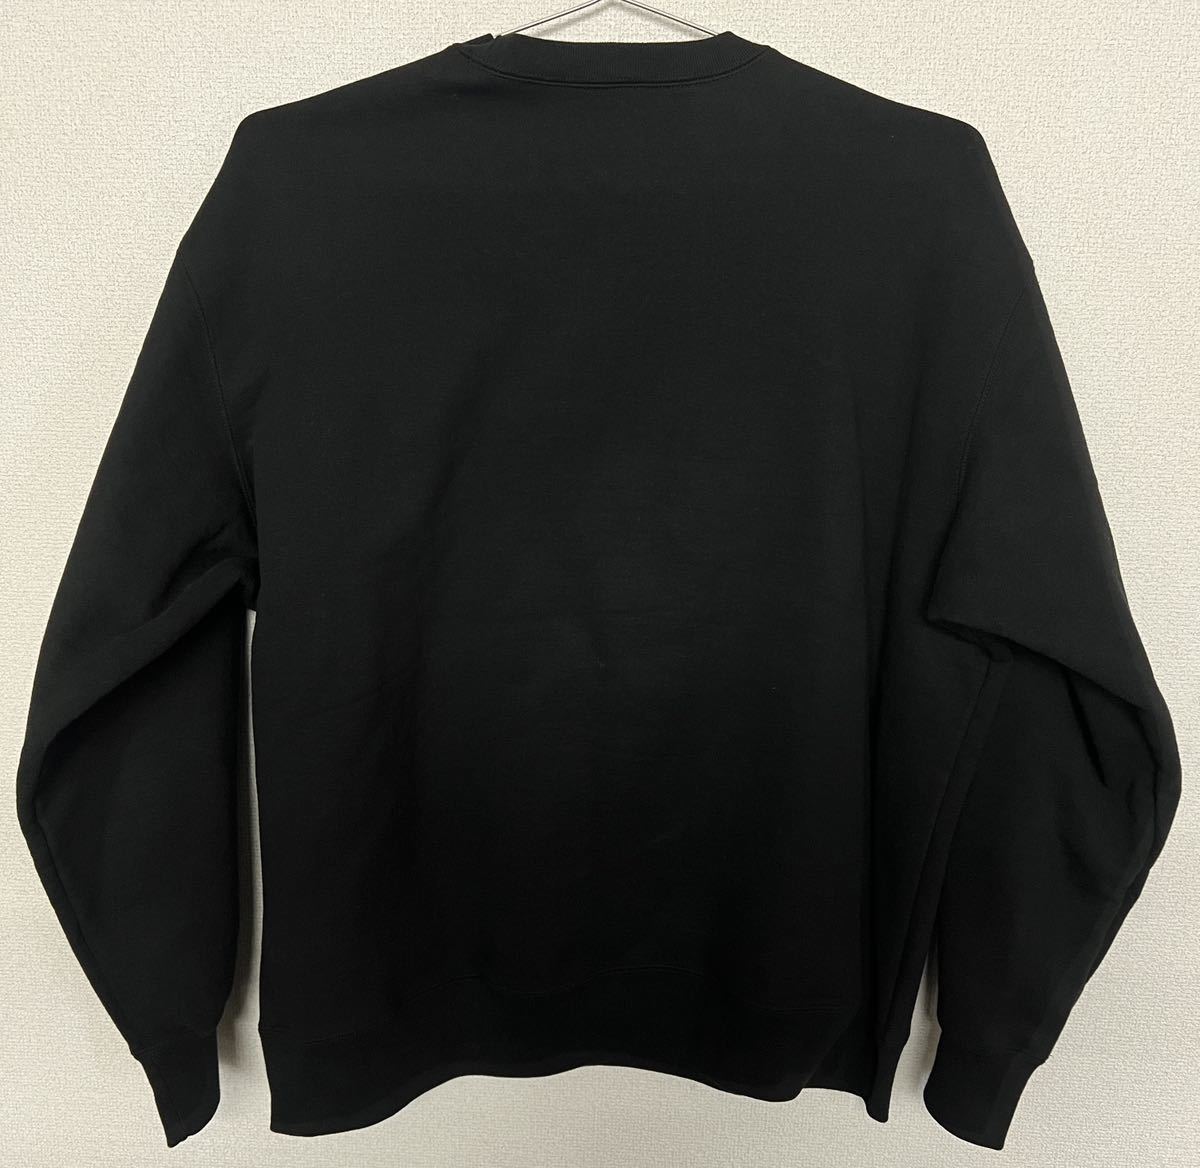 【XL】Box Logo Crewneck Sweatshirt 試着のみ 正規オンライン購入 クルーネック スウェット トレーナー シュプリーム ボックスロゴ